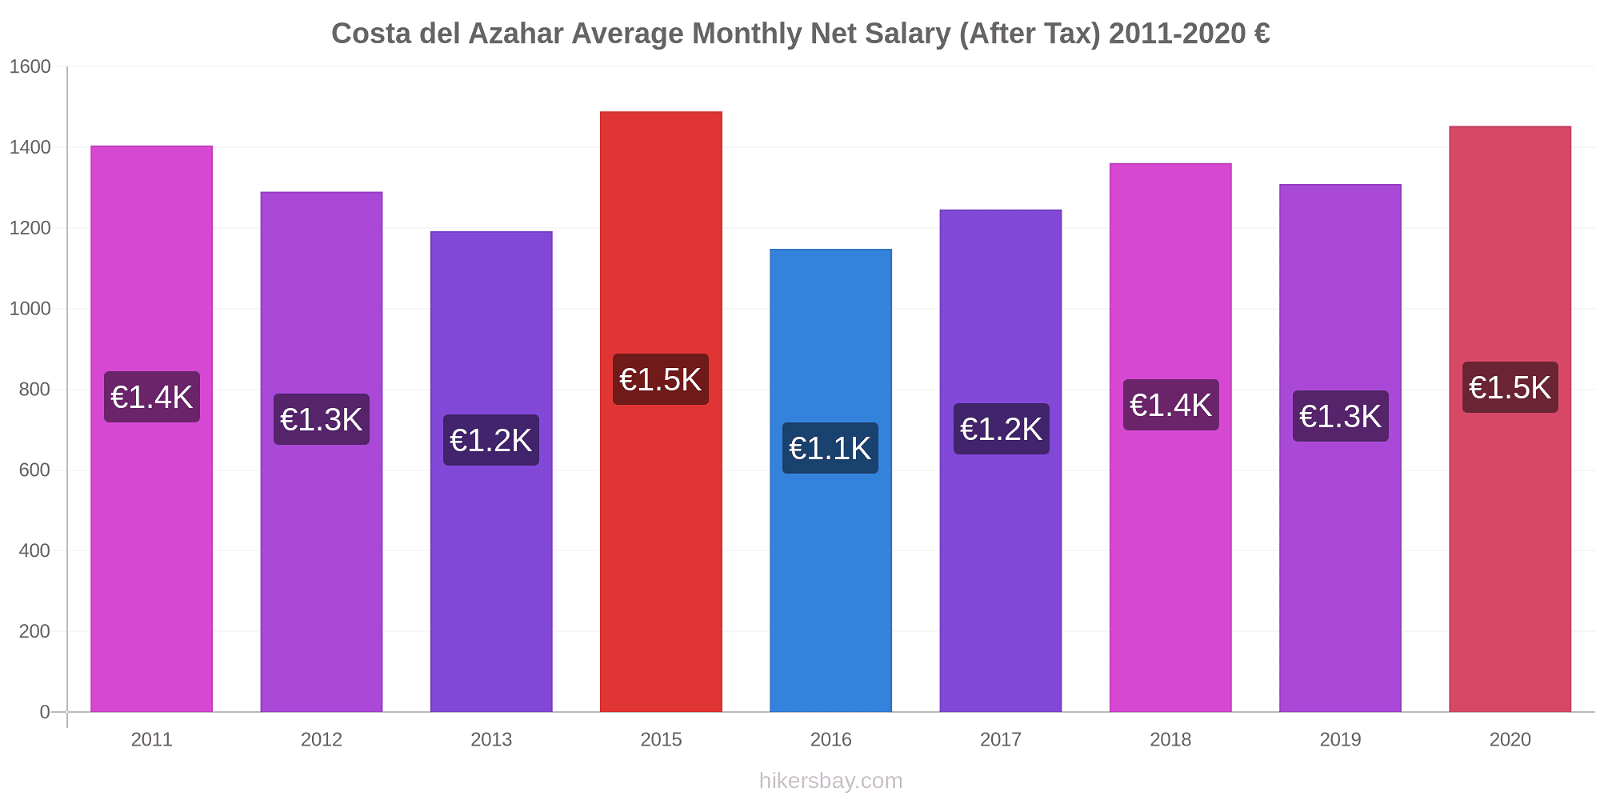 Costa del Azahar price changes Average Monthly Net Salary (After Tax) hikersbay.com